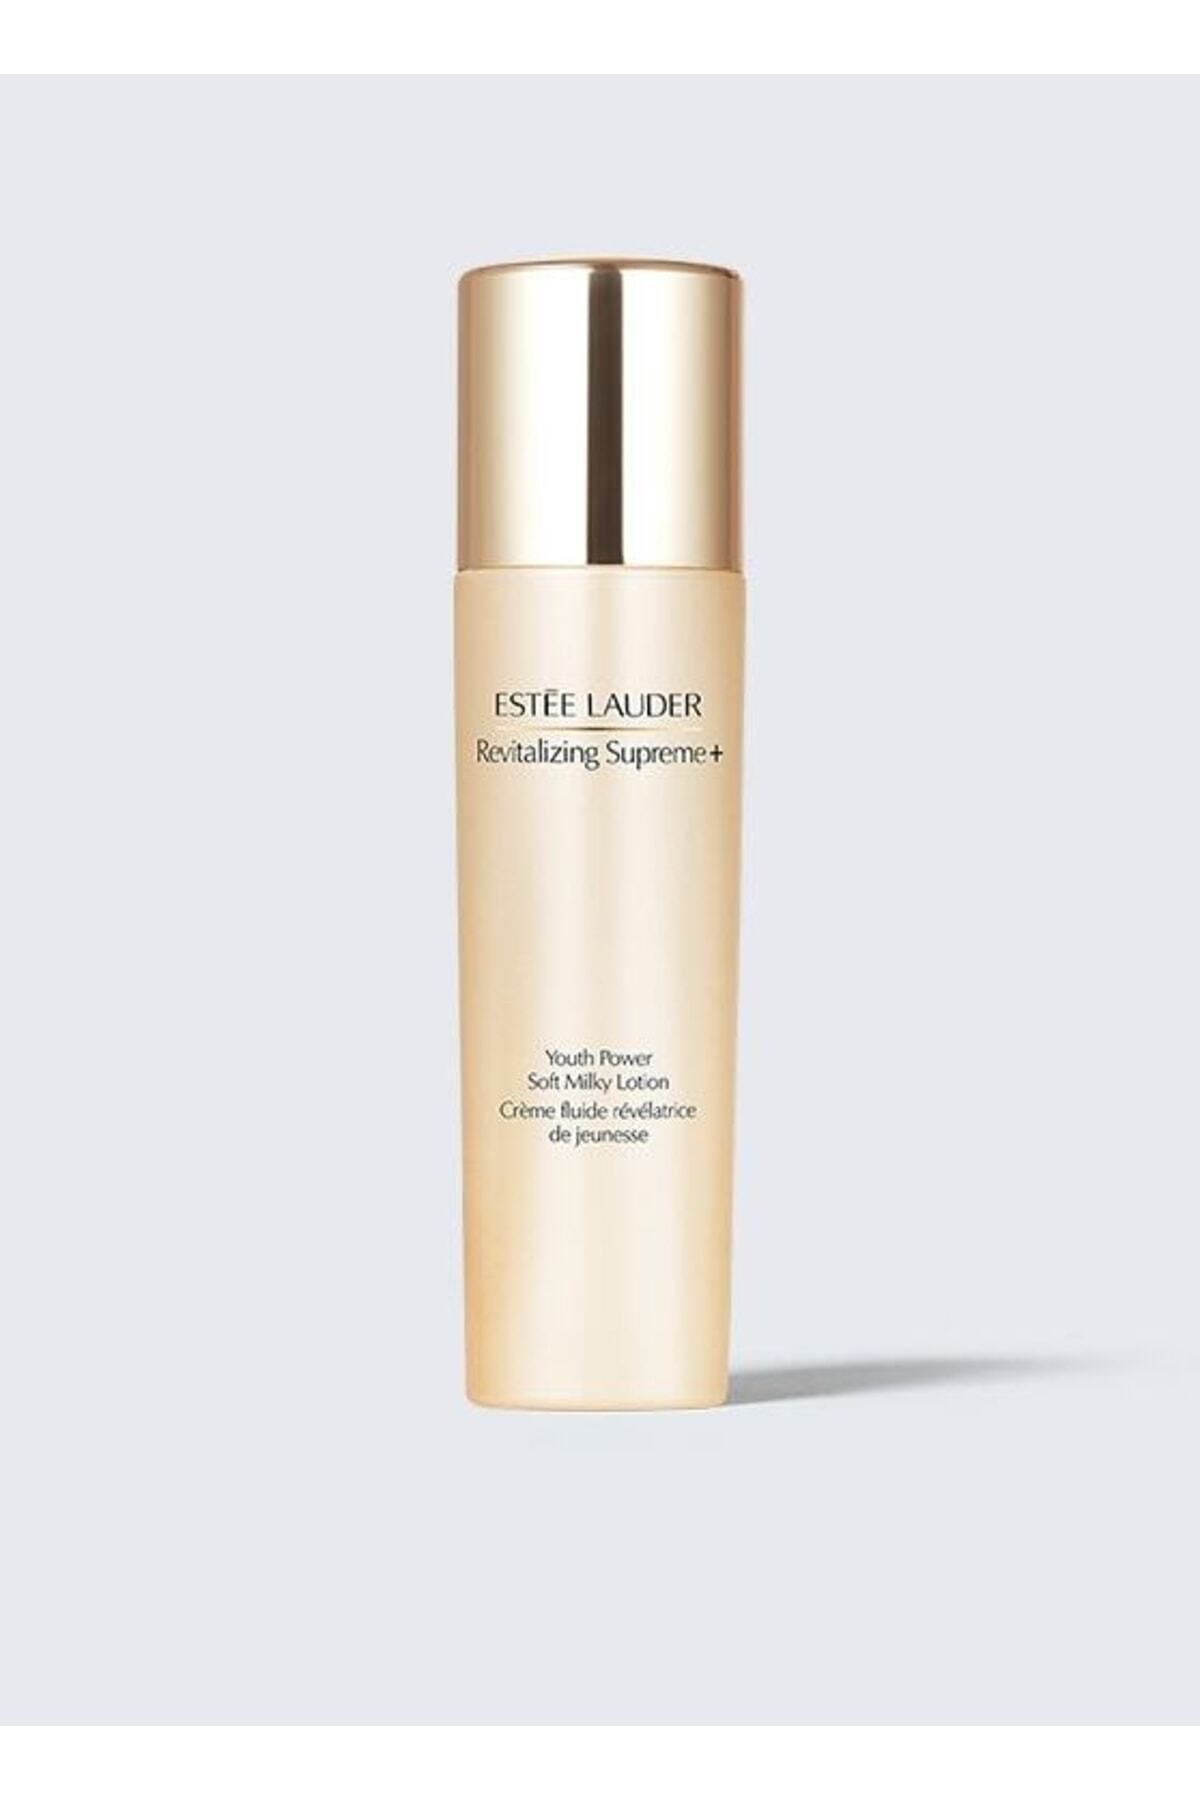 Estee Lauder مرطوب کننده مراقبت از پوست صورت و گردن بافت تجدید کننده پوستی Supreme+Skin Renewal با حجم 100 میلی لیتر